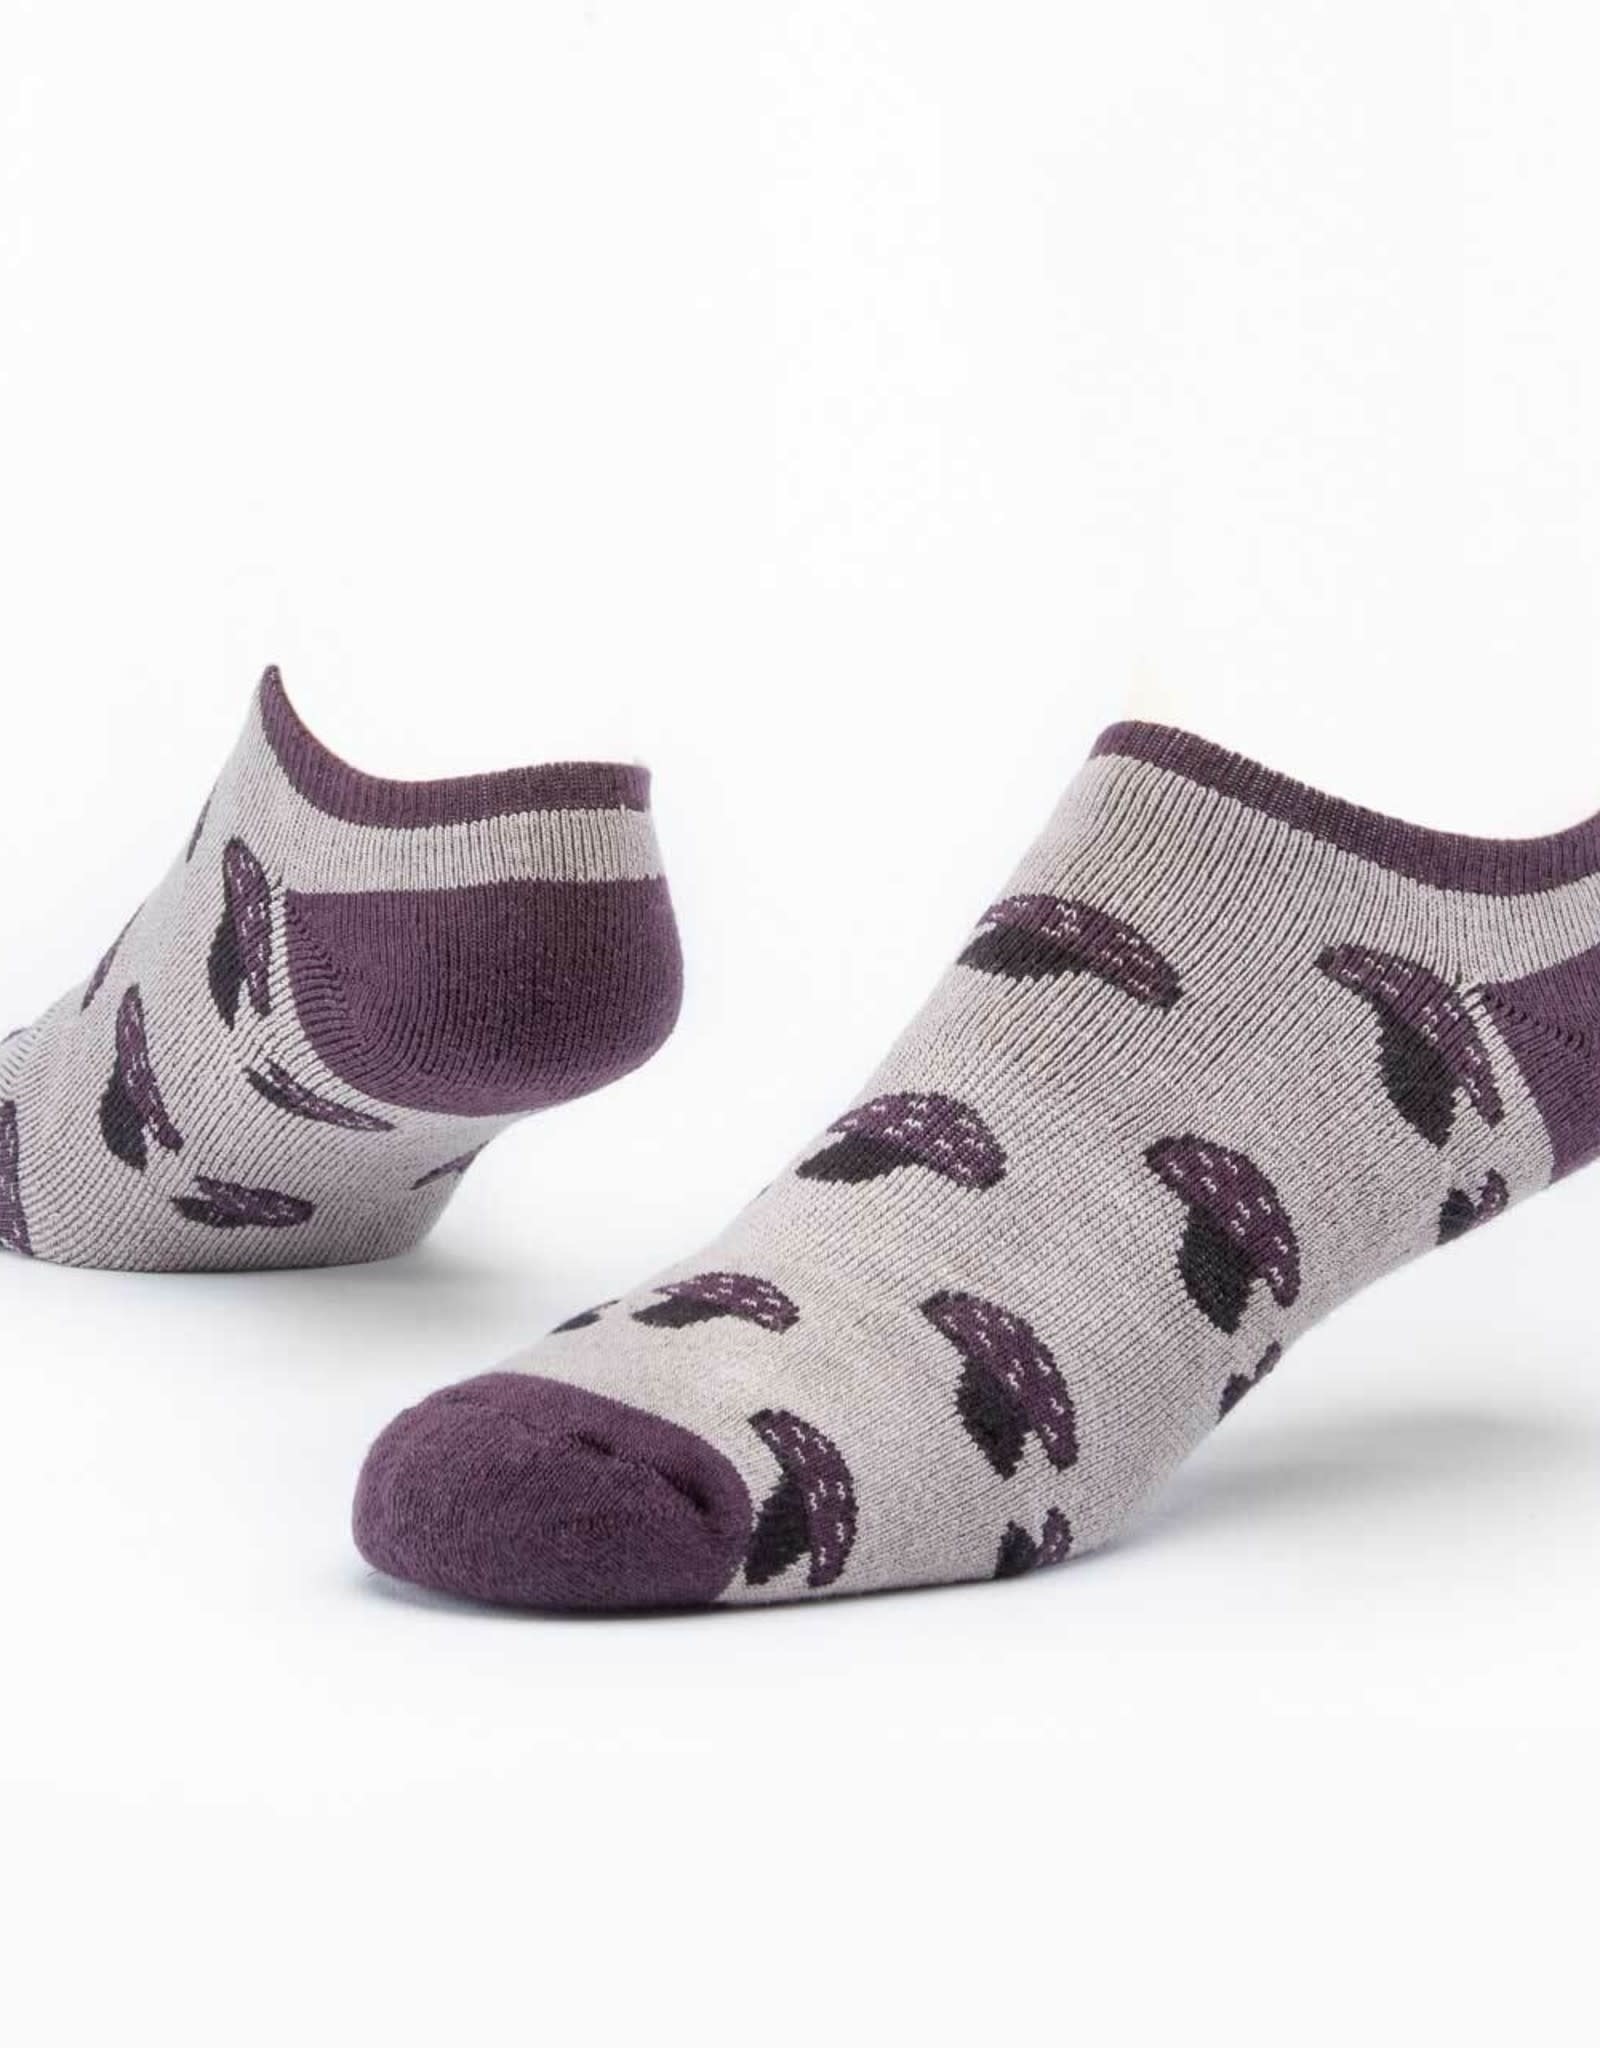 Maggie's Organics Footie Socks (Mushroom Grey)